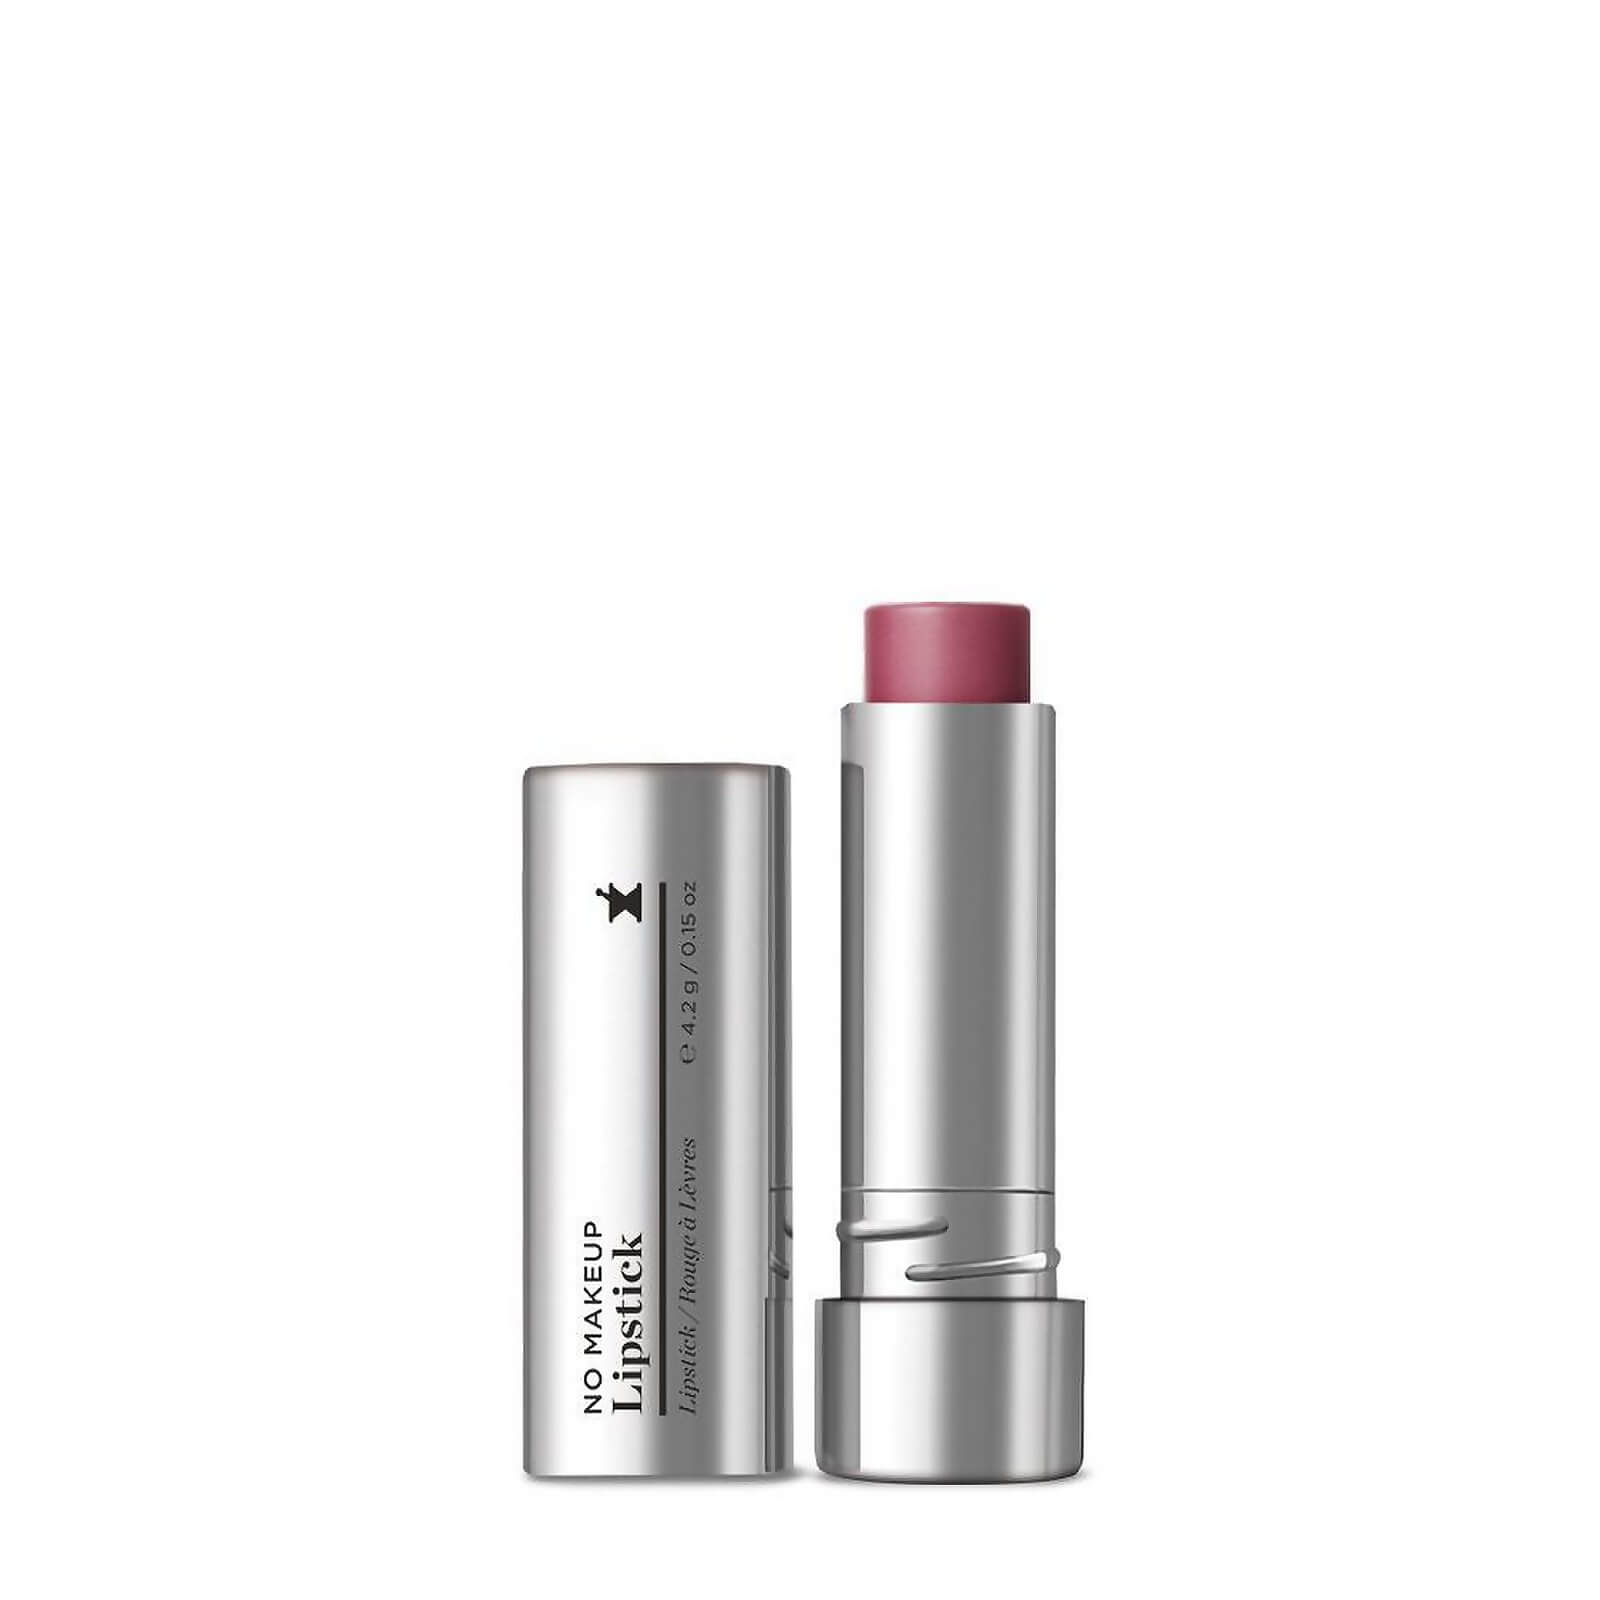 Perricone MD No Makeup Lipstick SPF 15 4.2g (Various Shades) - 2 Rose